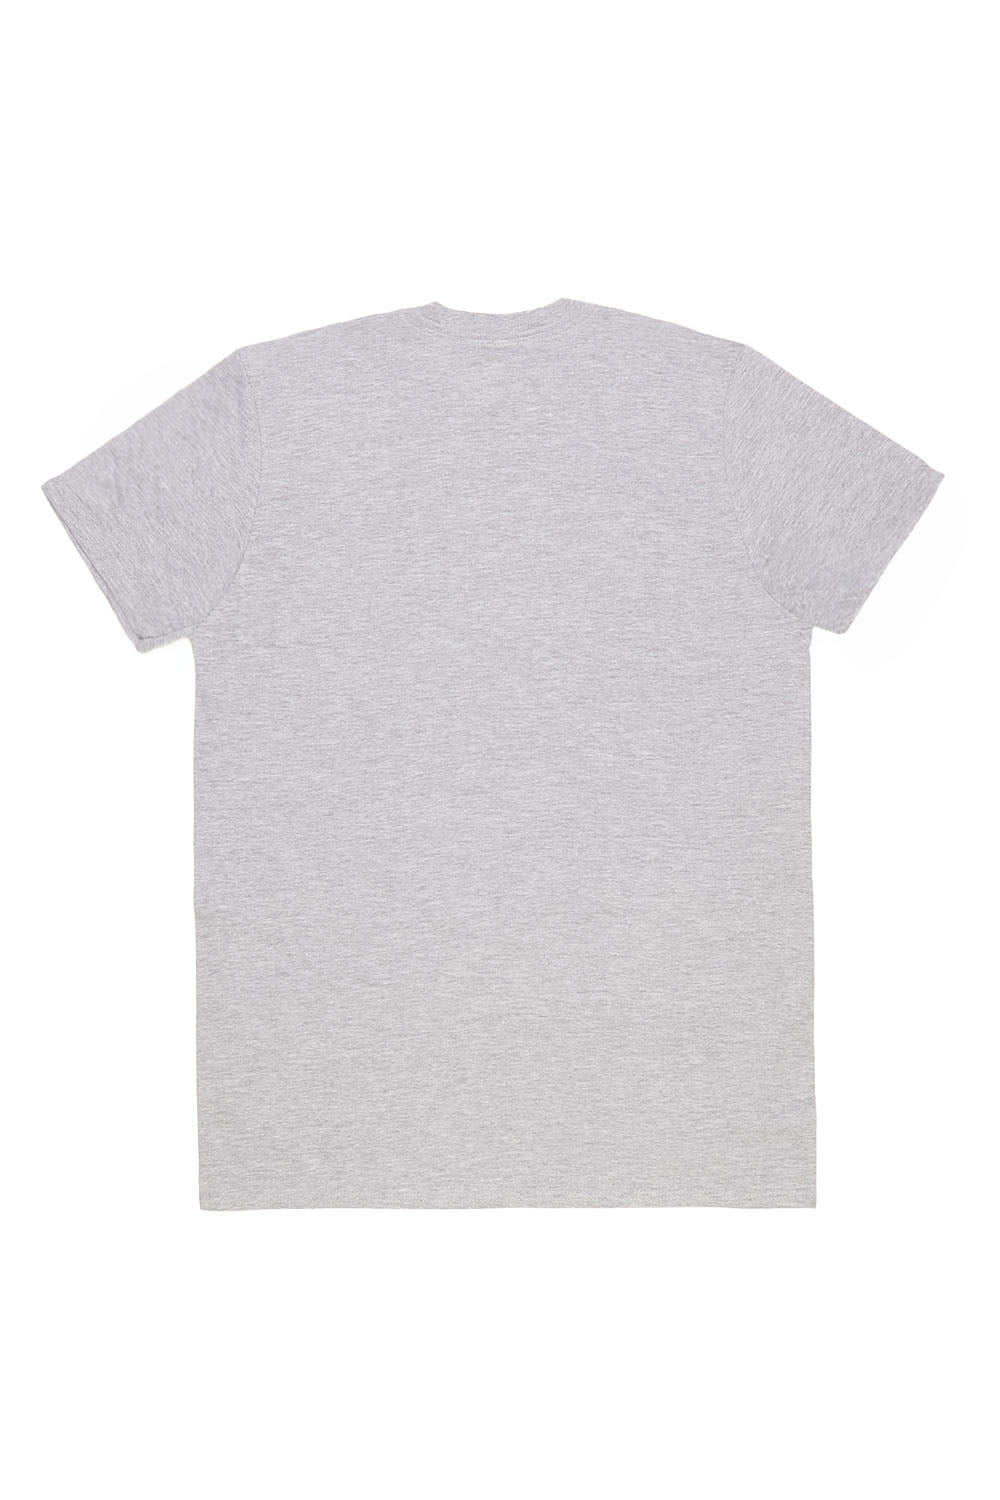 France T-Shirt in Ash Grey(Custom Packs)